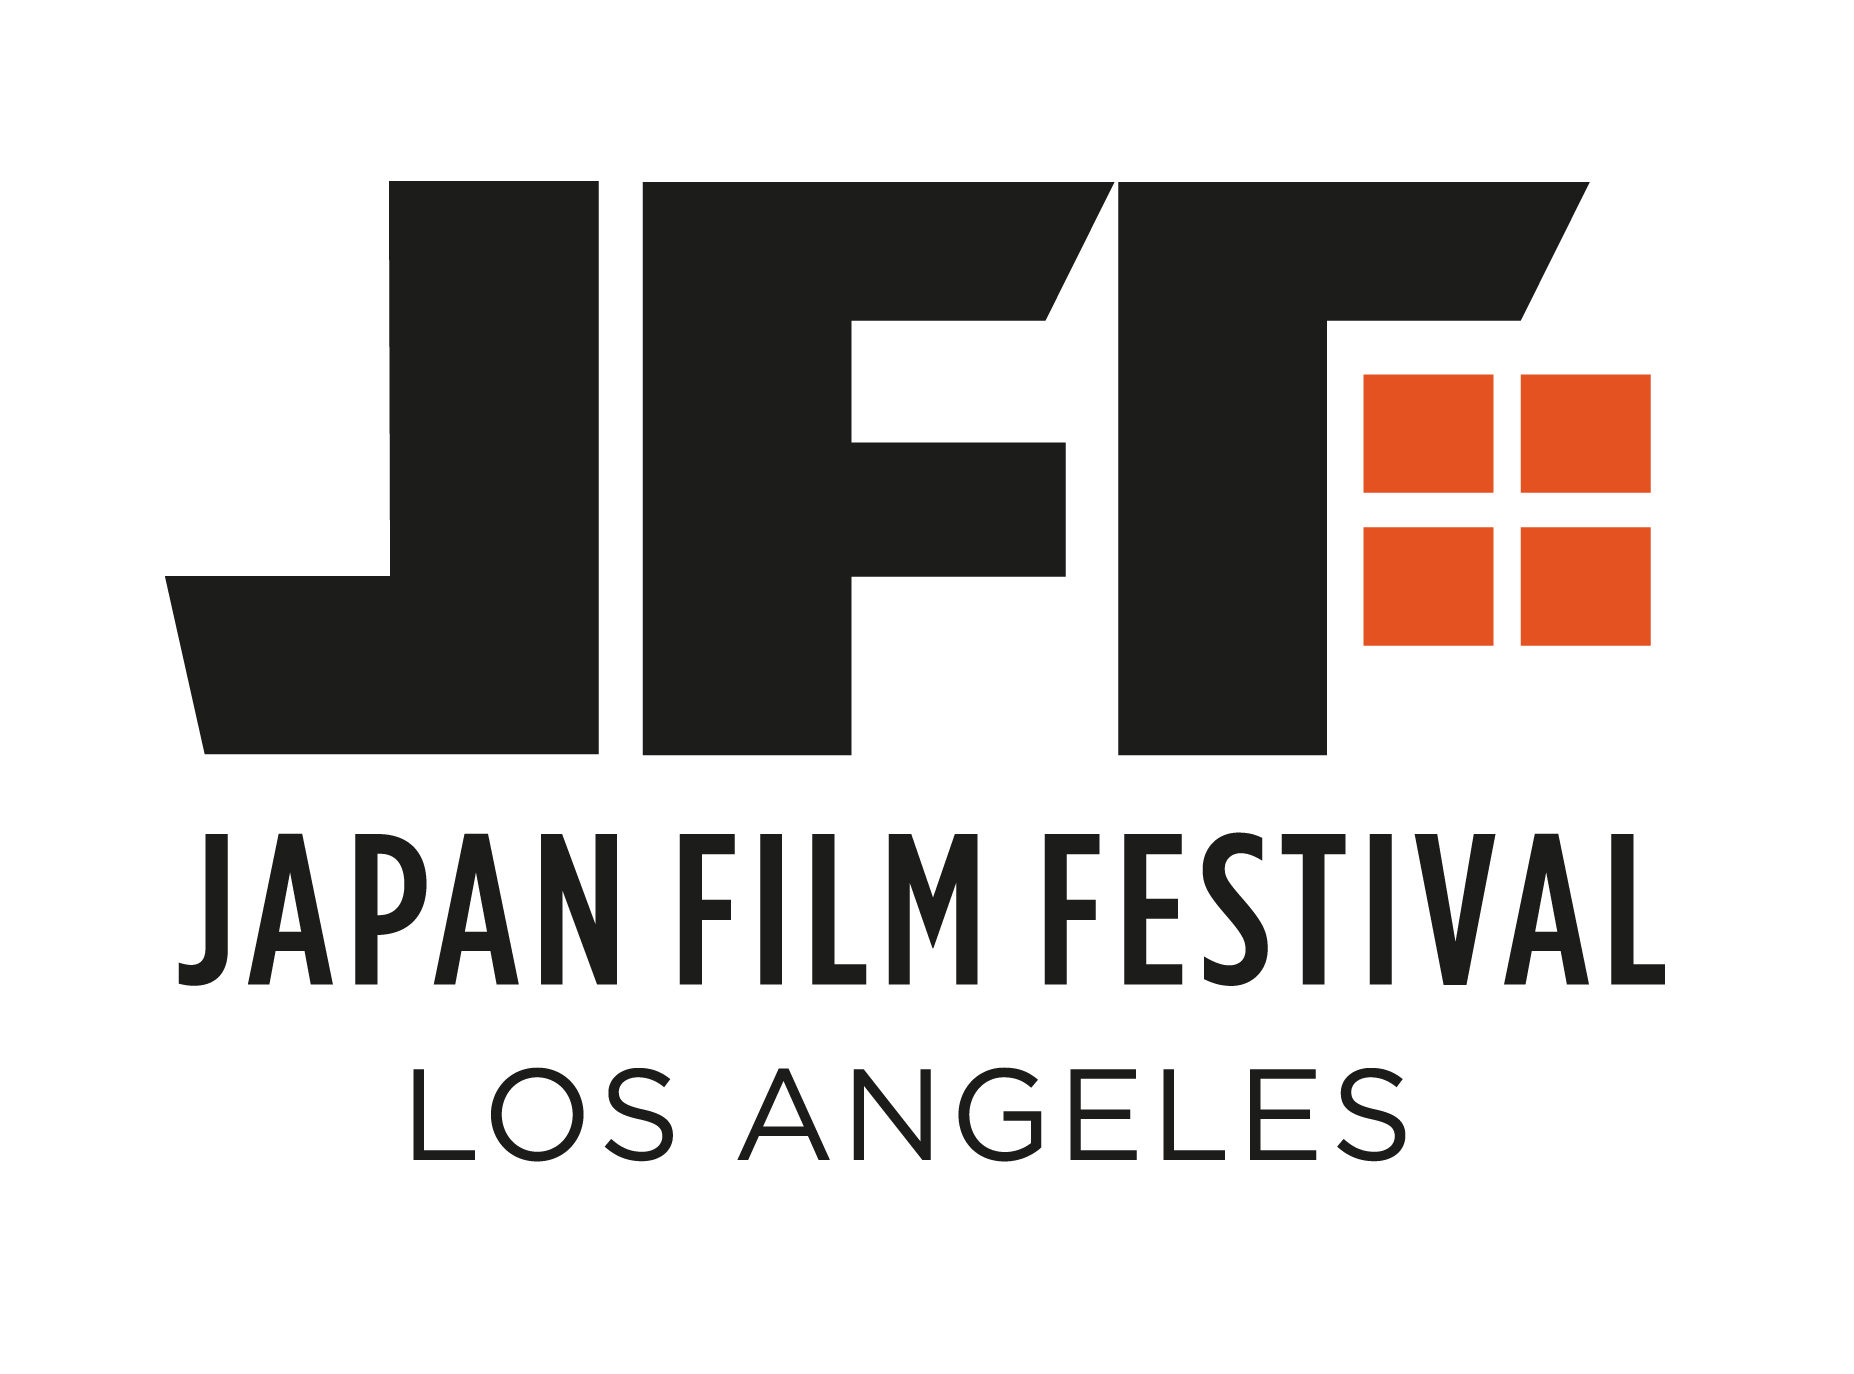 Japan Film Festival Los Angeles